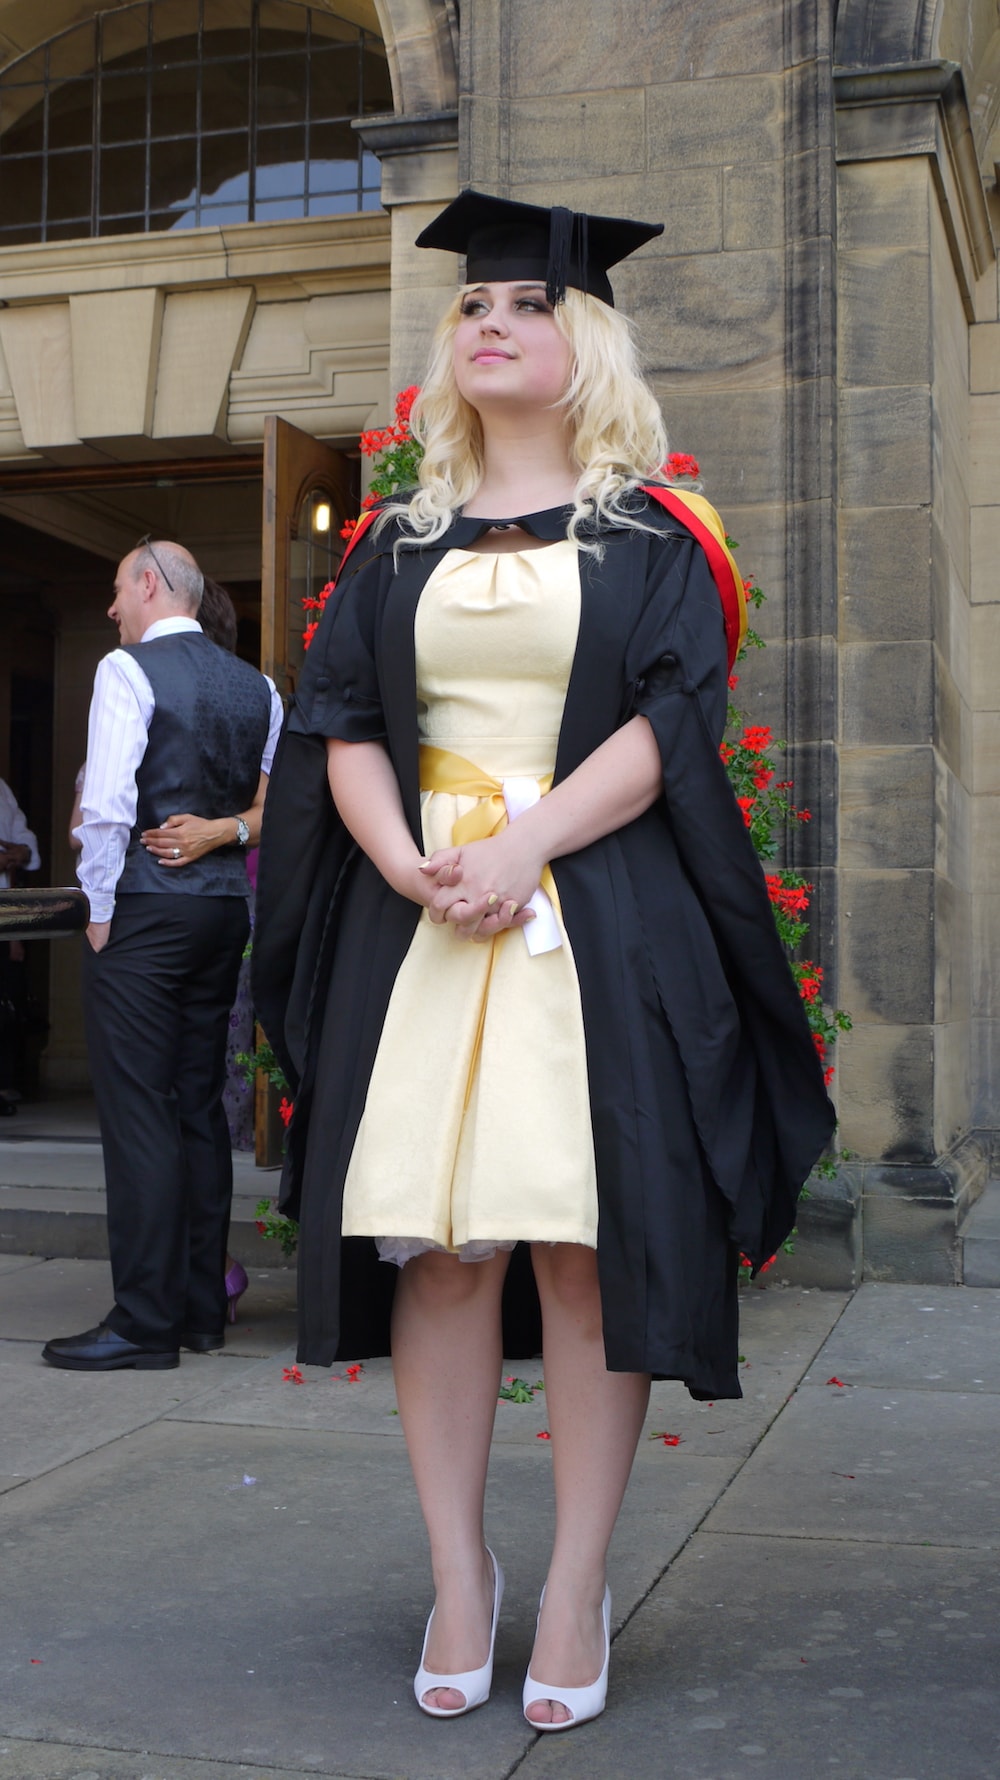 Jess graduated from Bangor University in 2013